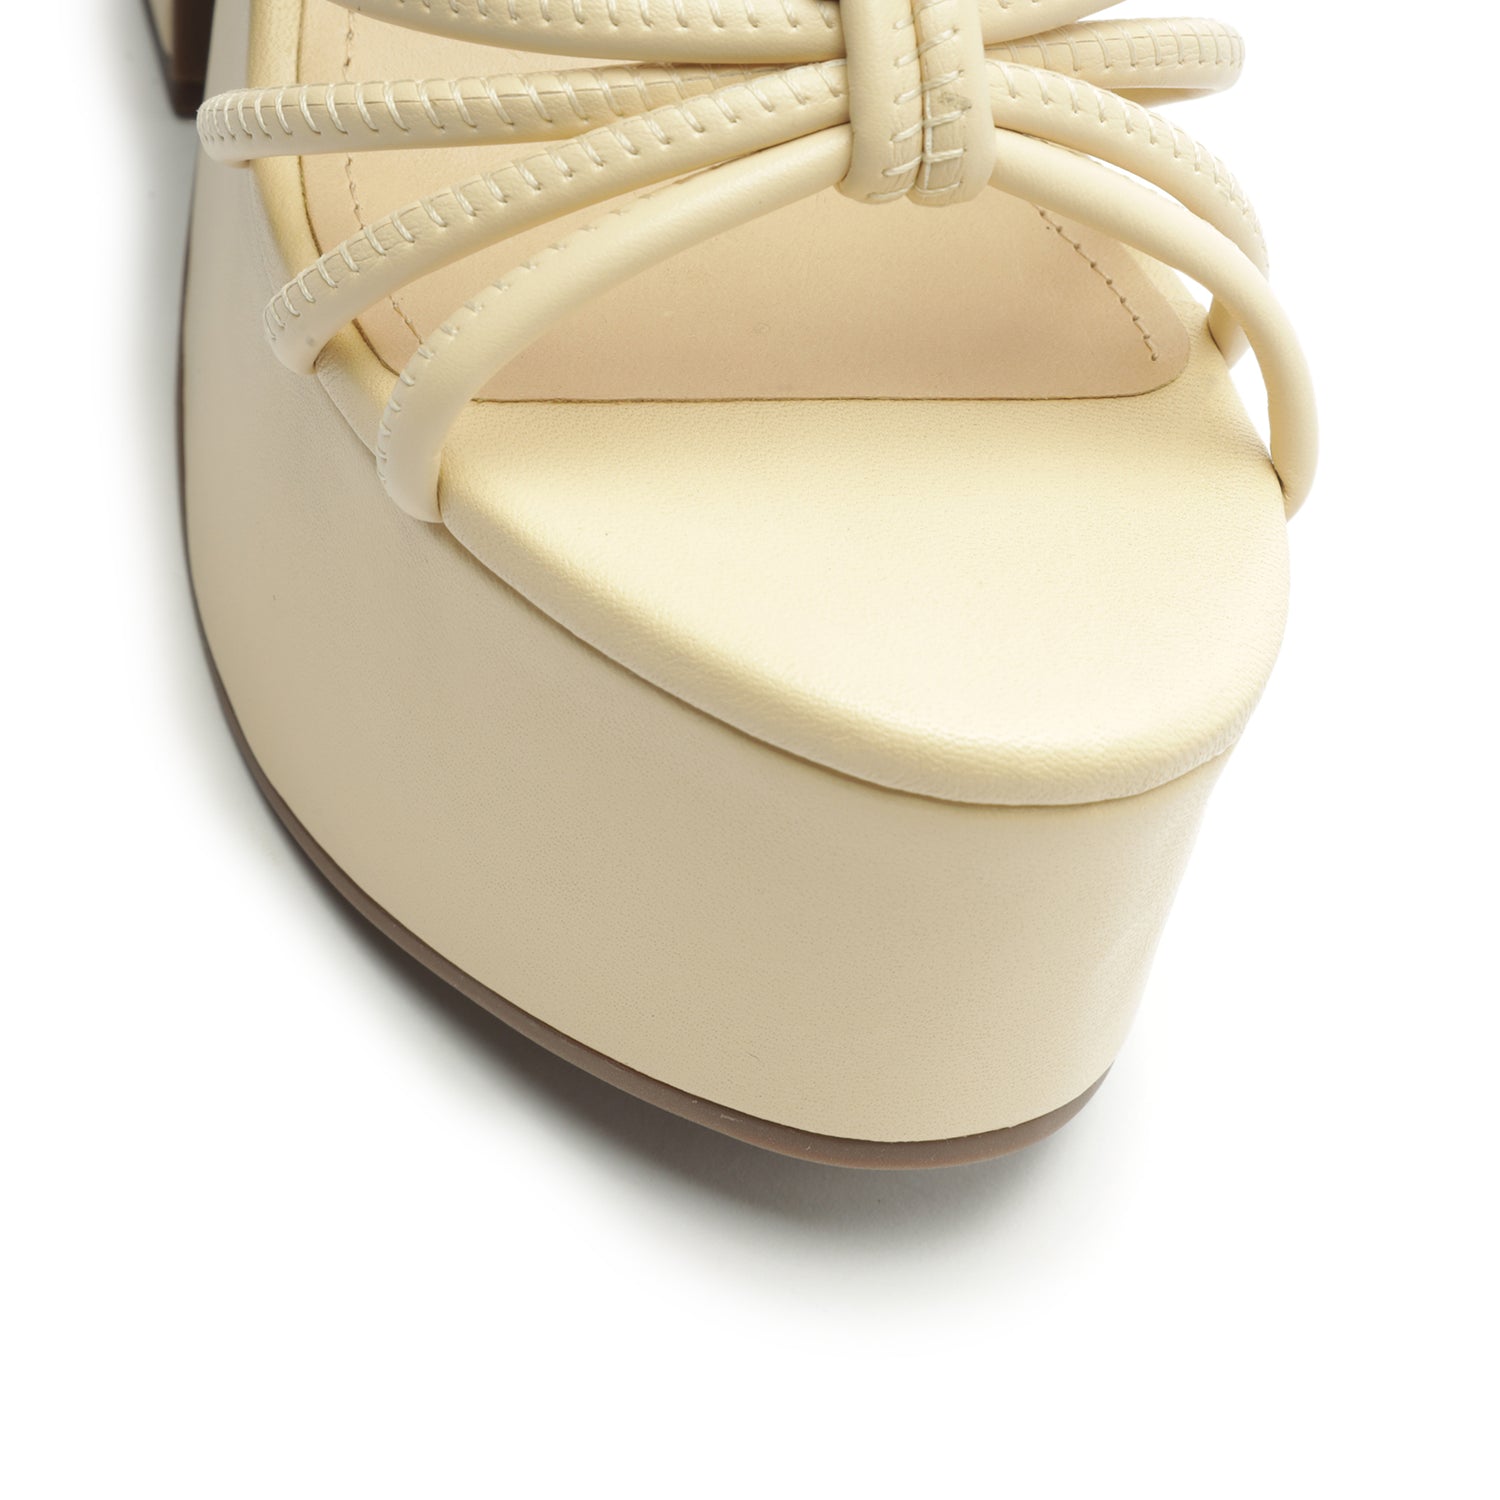 Mahi Cutout & Nappa Sandal Sandals PRE FALL 23    - Schutz Shoes